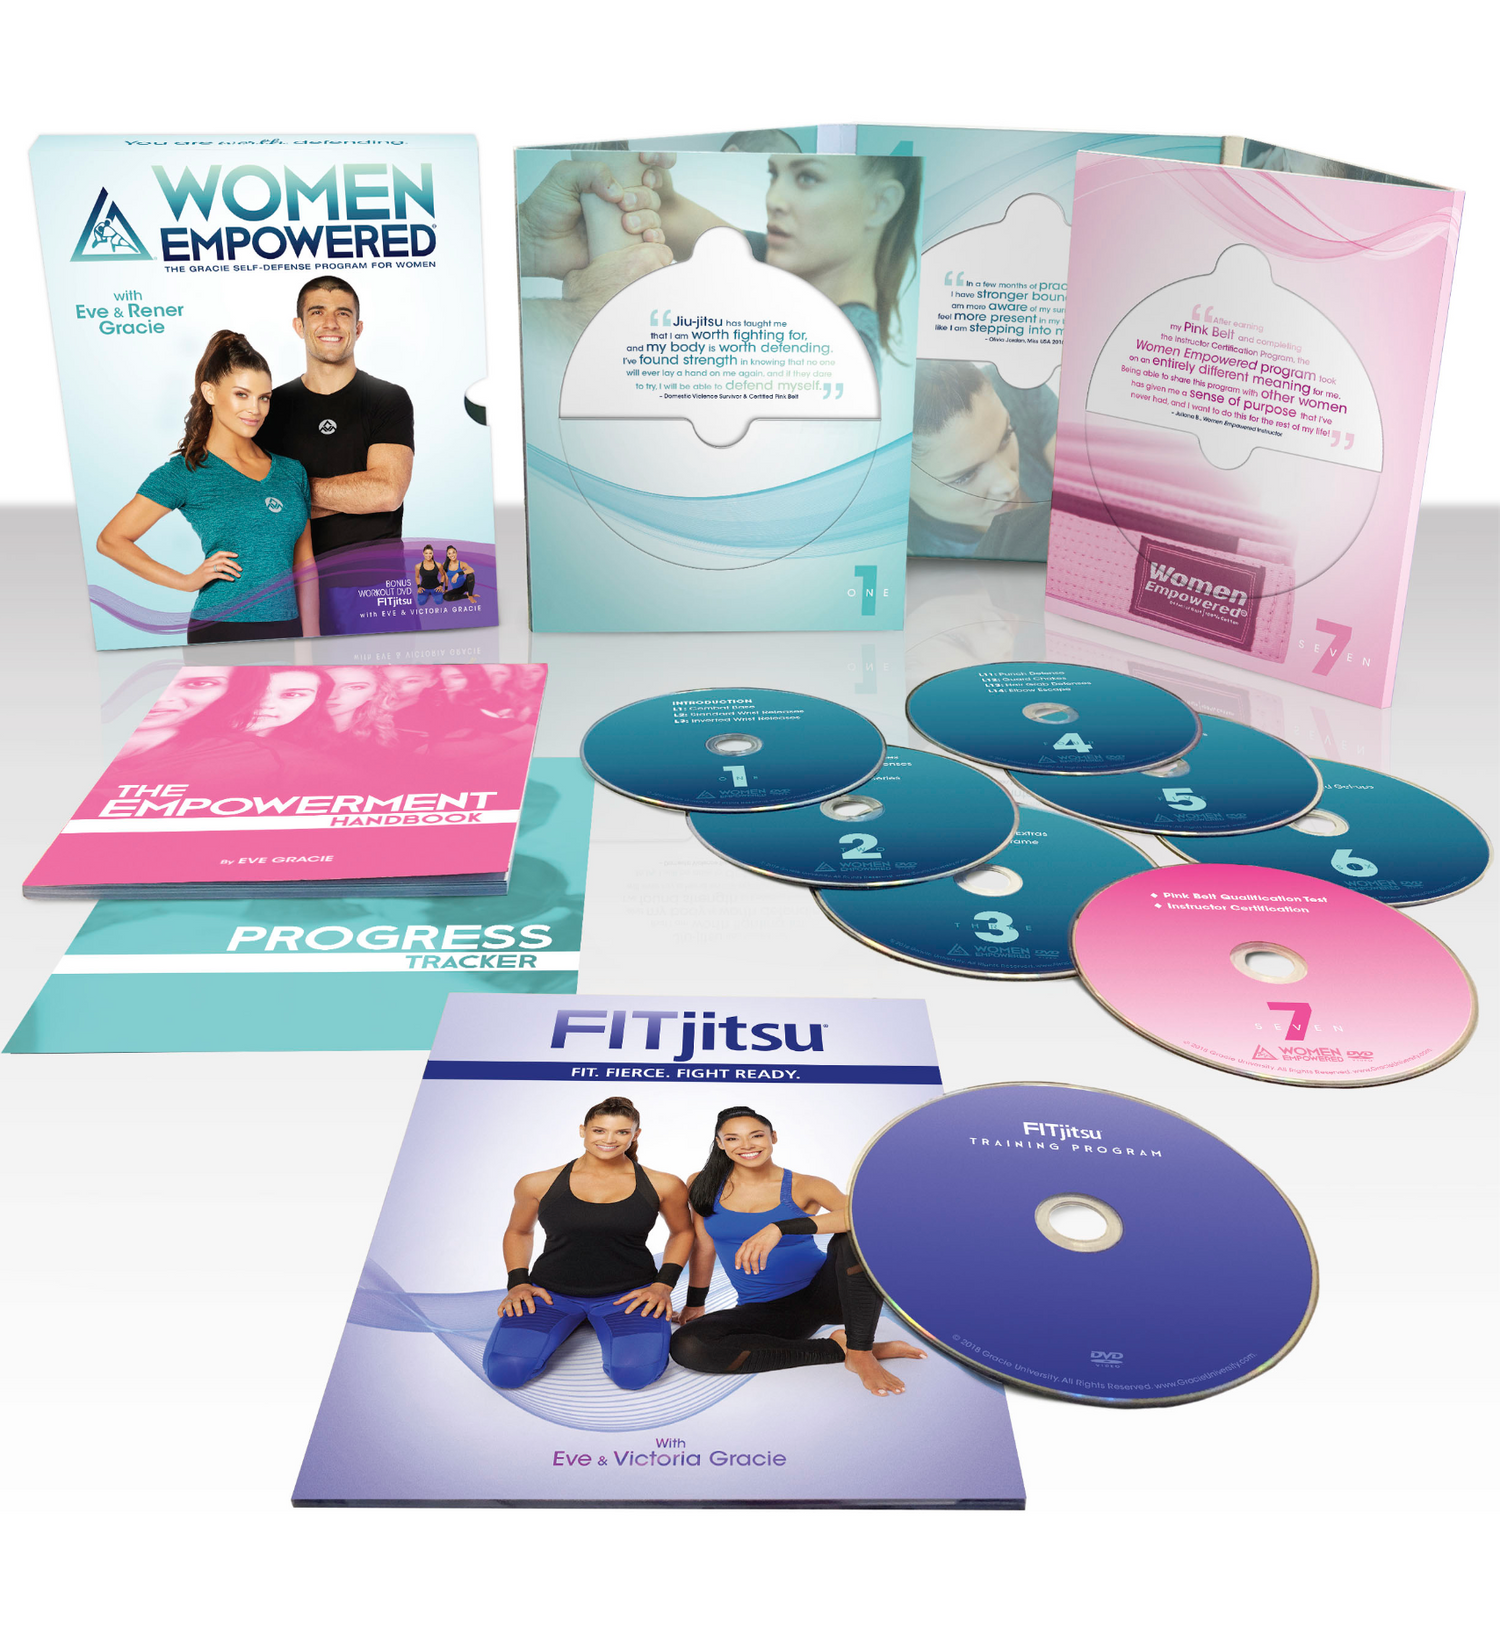 Women Empowered 2.0 Self Defense 8 DVD Set by Gracie University - Budovideos Inc